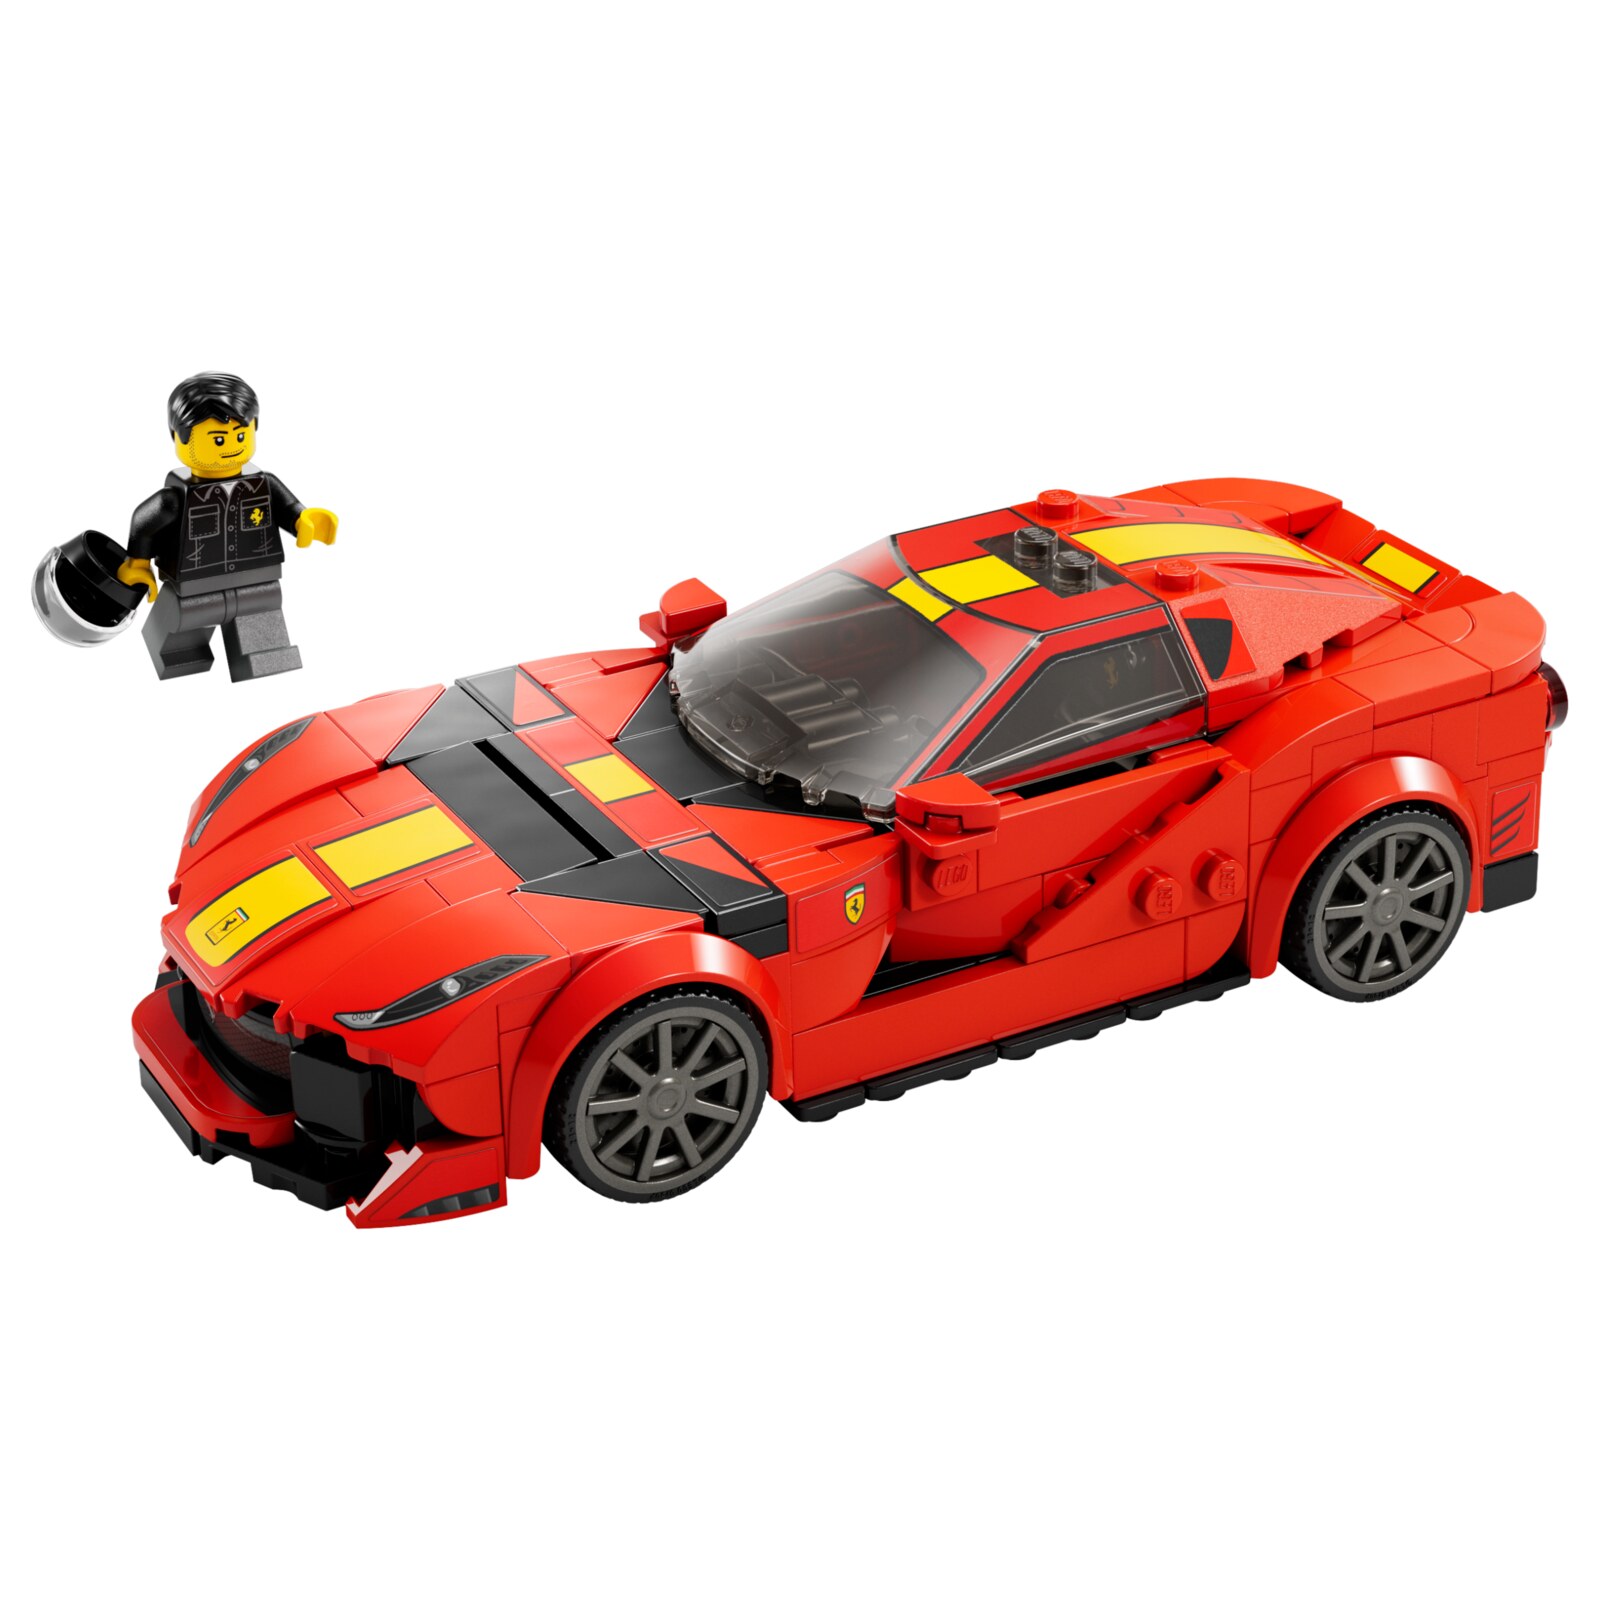 Конструктор LEGO Speed Champions Ferrari 812 Competizione, 261 деталь, 76914 конструктор lego speed champions 76910 aston martin valkyrie amr pro и vantage gt3